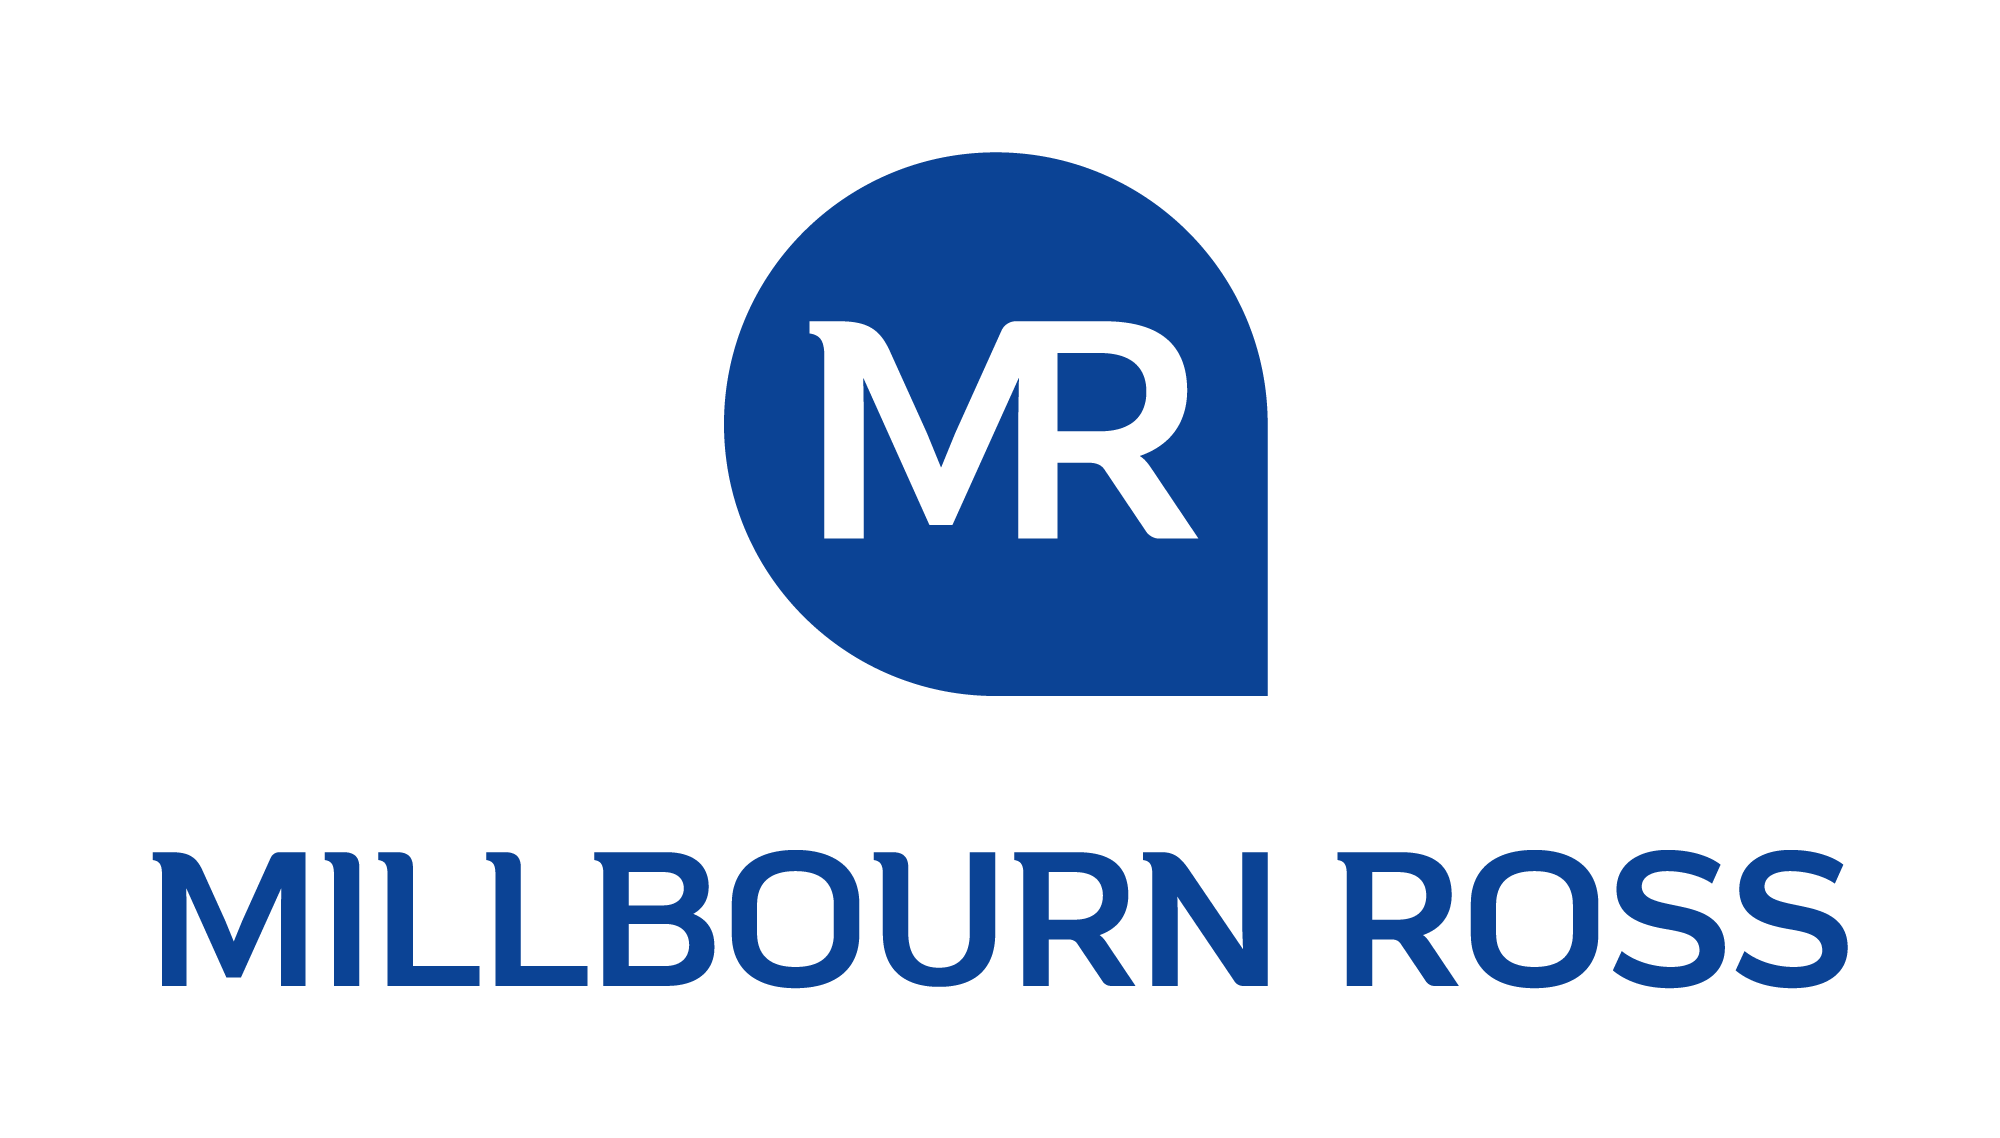 Millbourn Ross